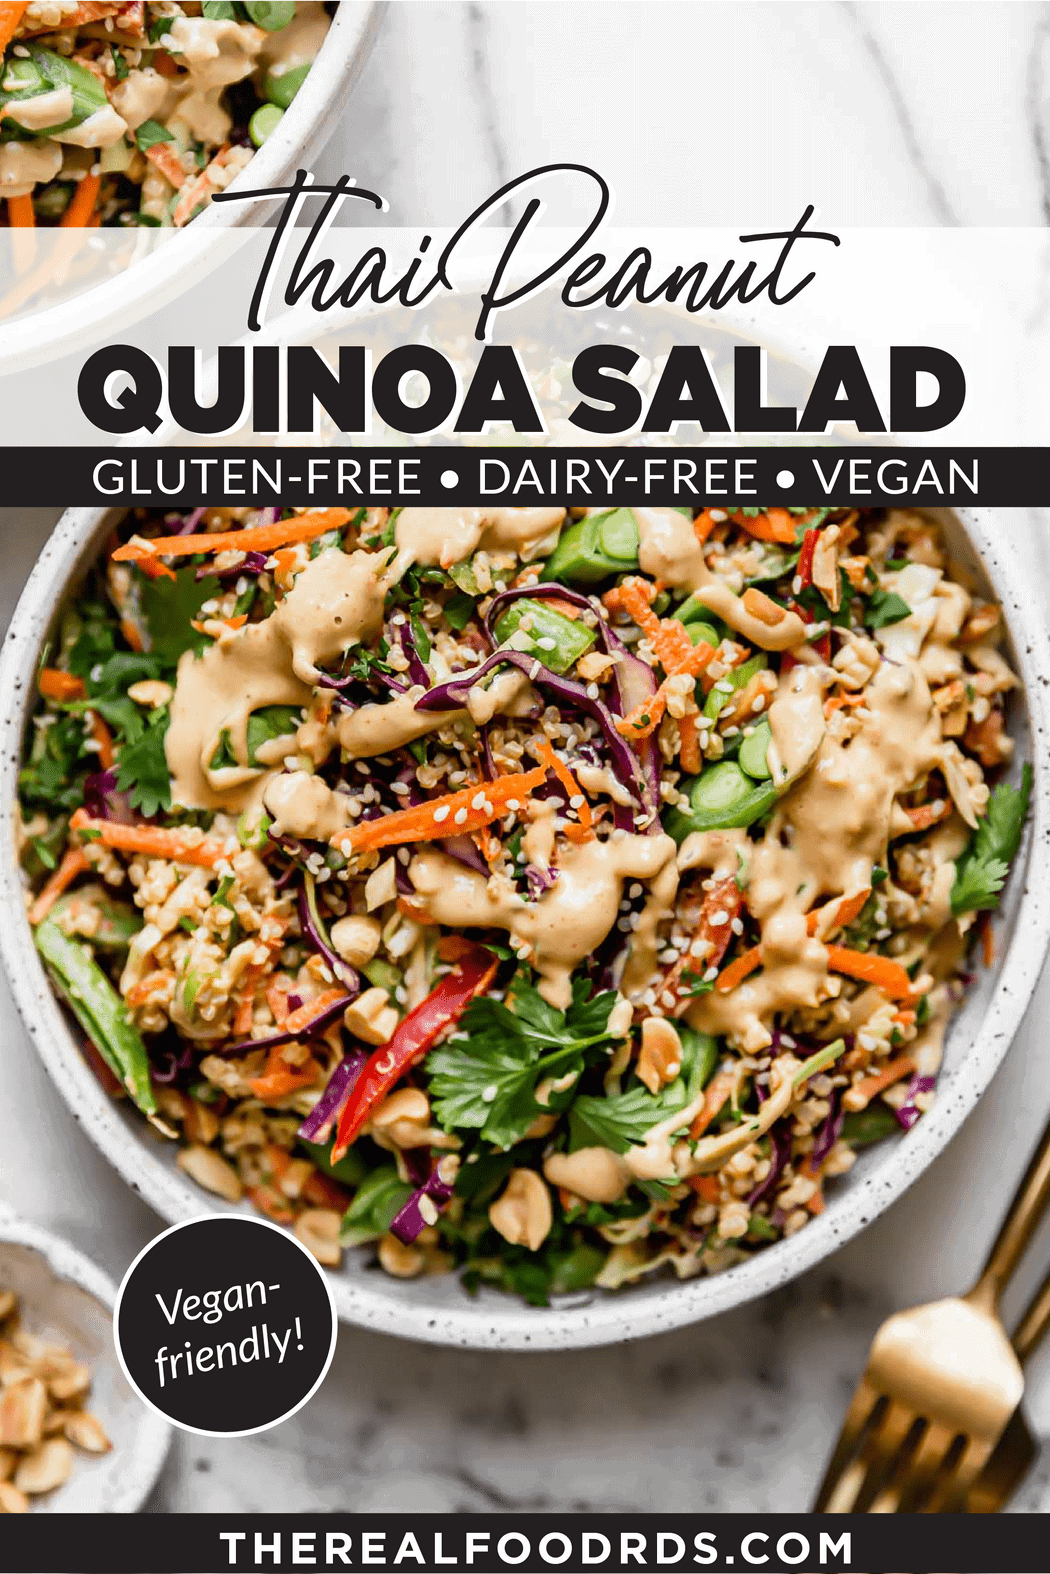 Thai-Inspired Peanut Quinoa Salad - The Real Food Dietitians